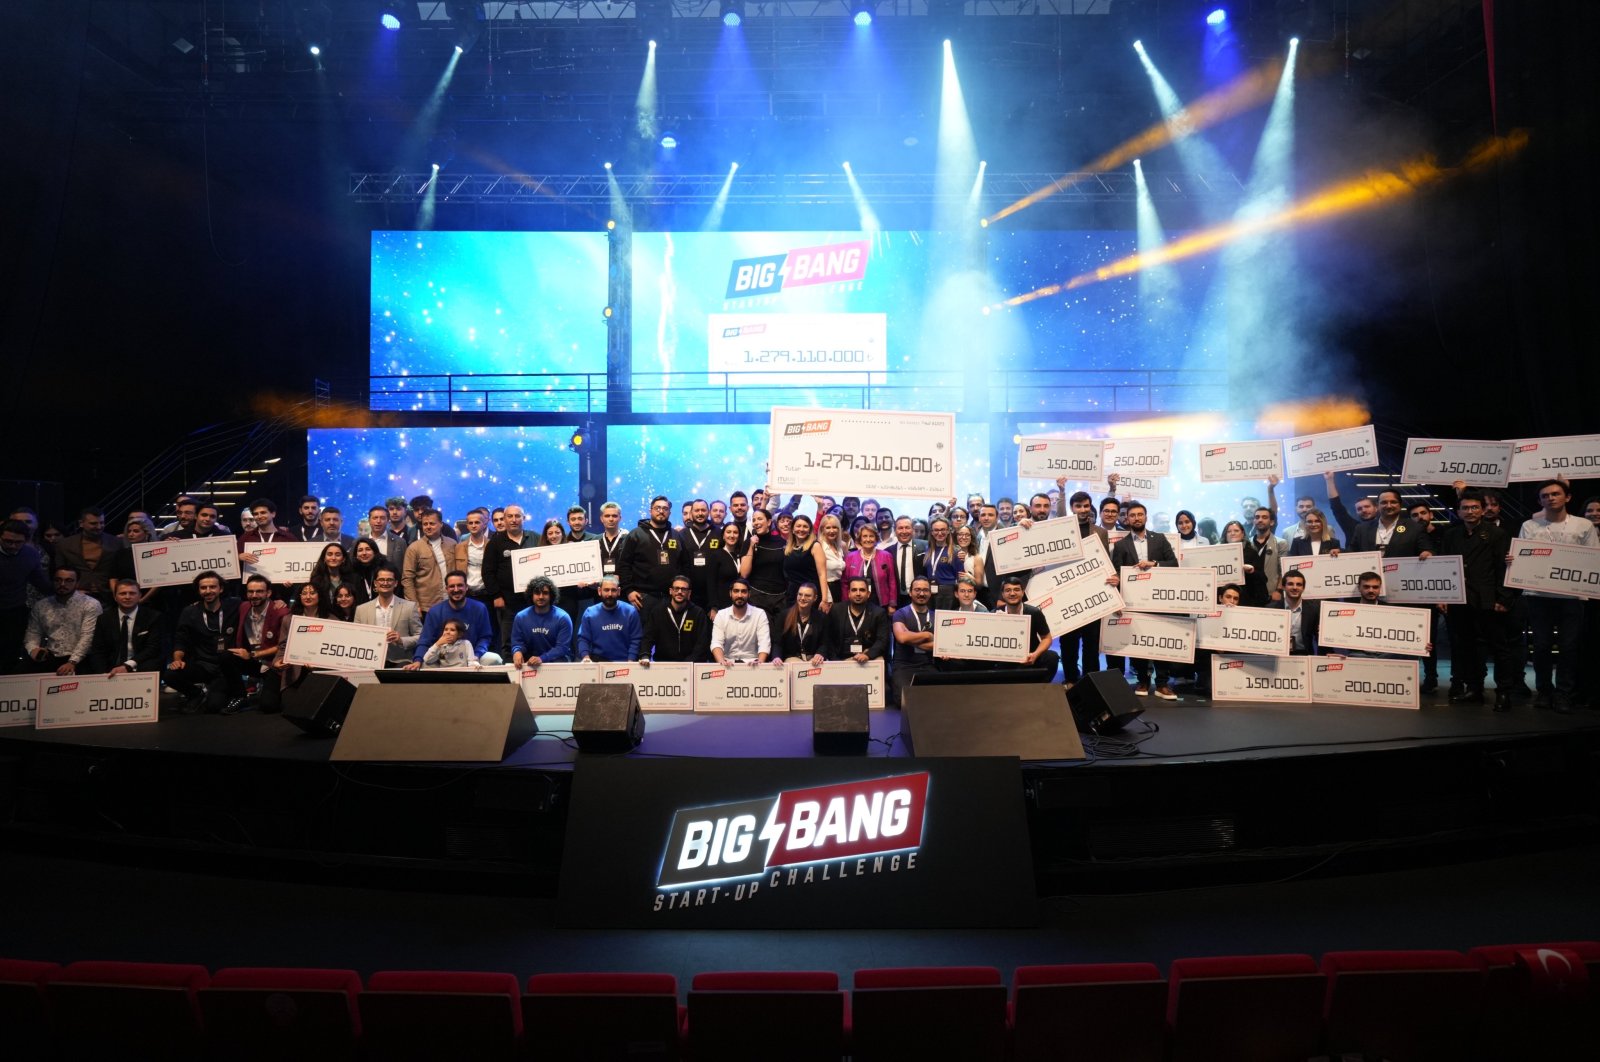 Big Bang Startup Challenge awards record $44M to Türkiye's top innovators | Daily Sabah - Daily Sabah